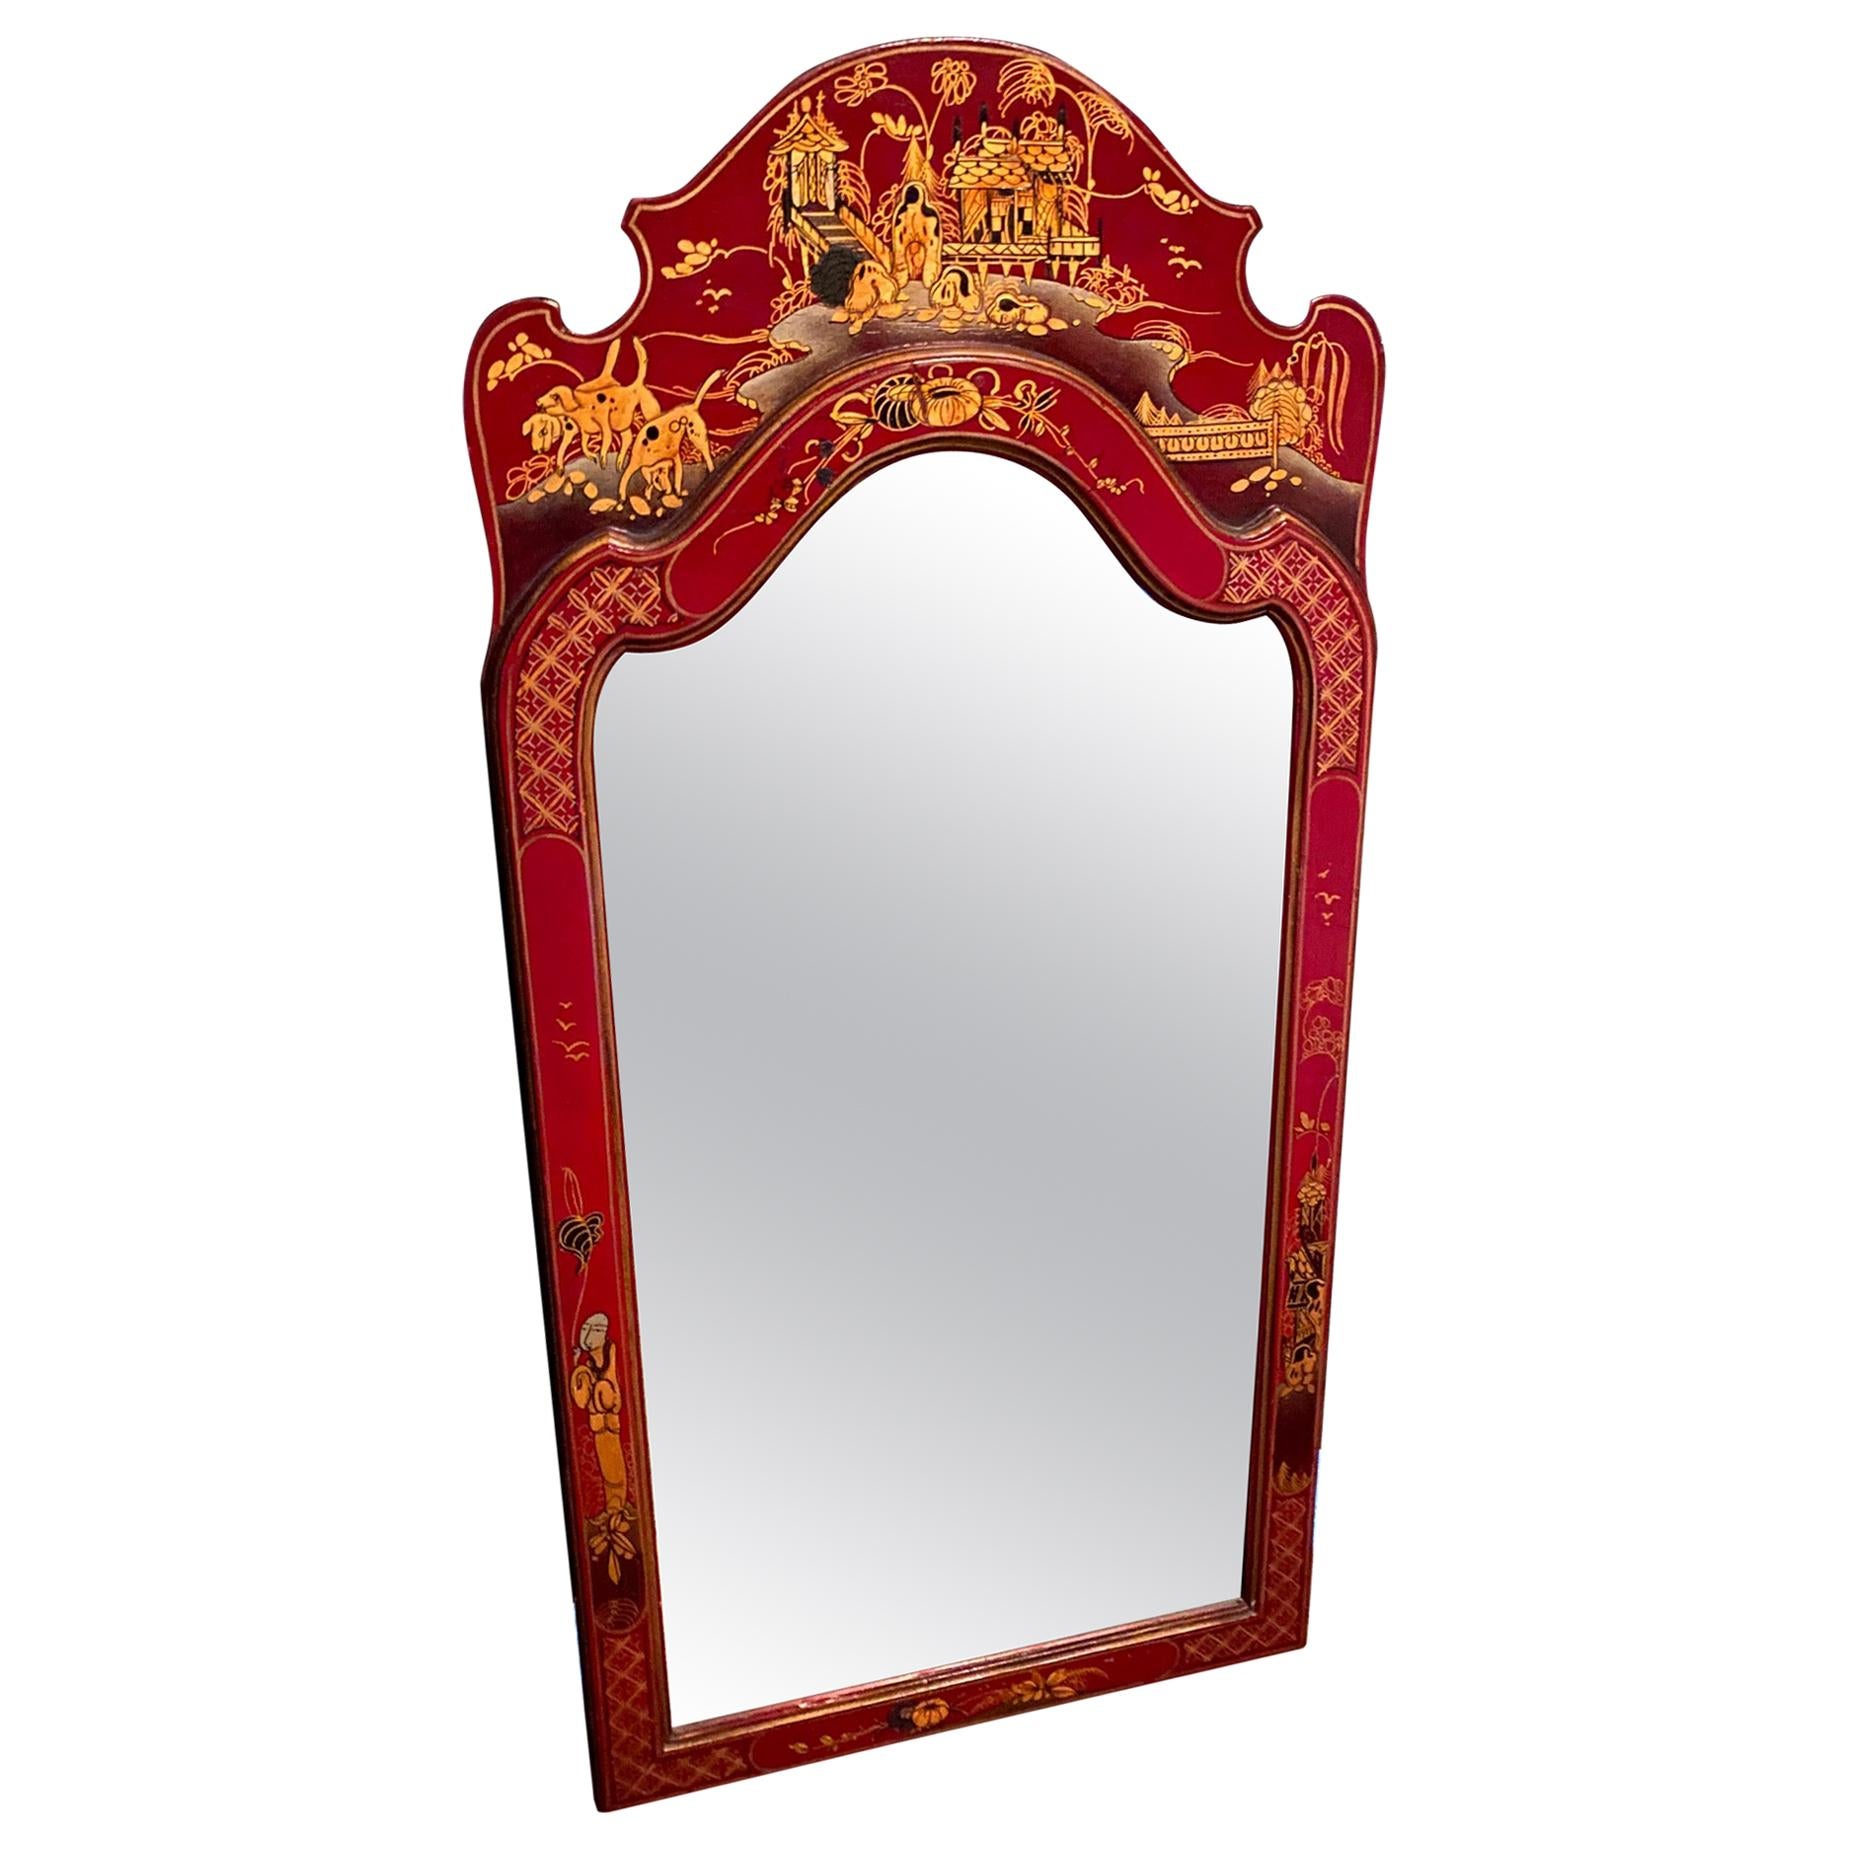 Edwardian Period Red Chinoiserie Mirror in the Queen Anne Taste